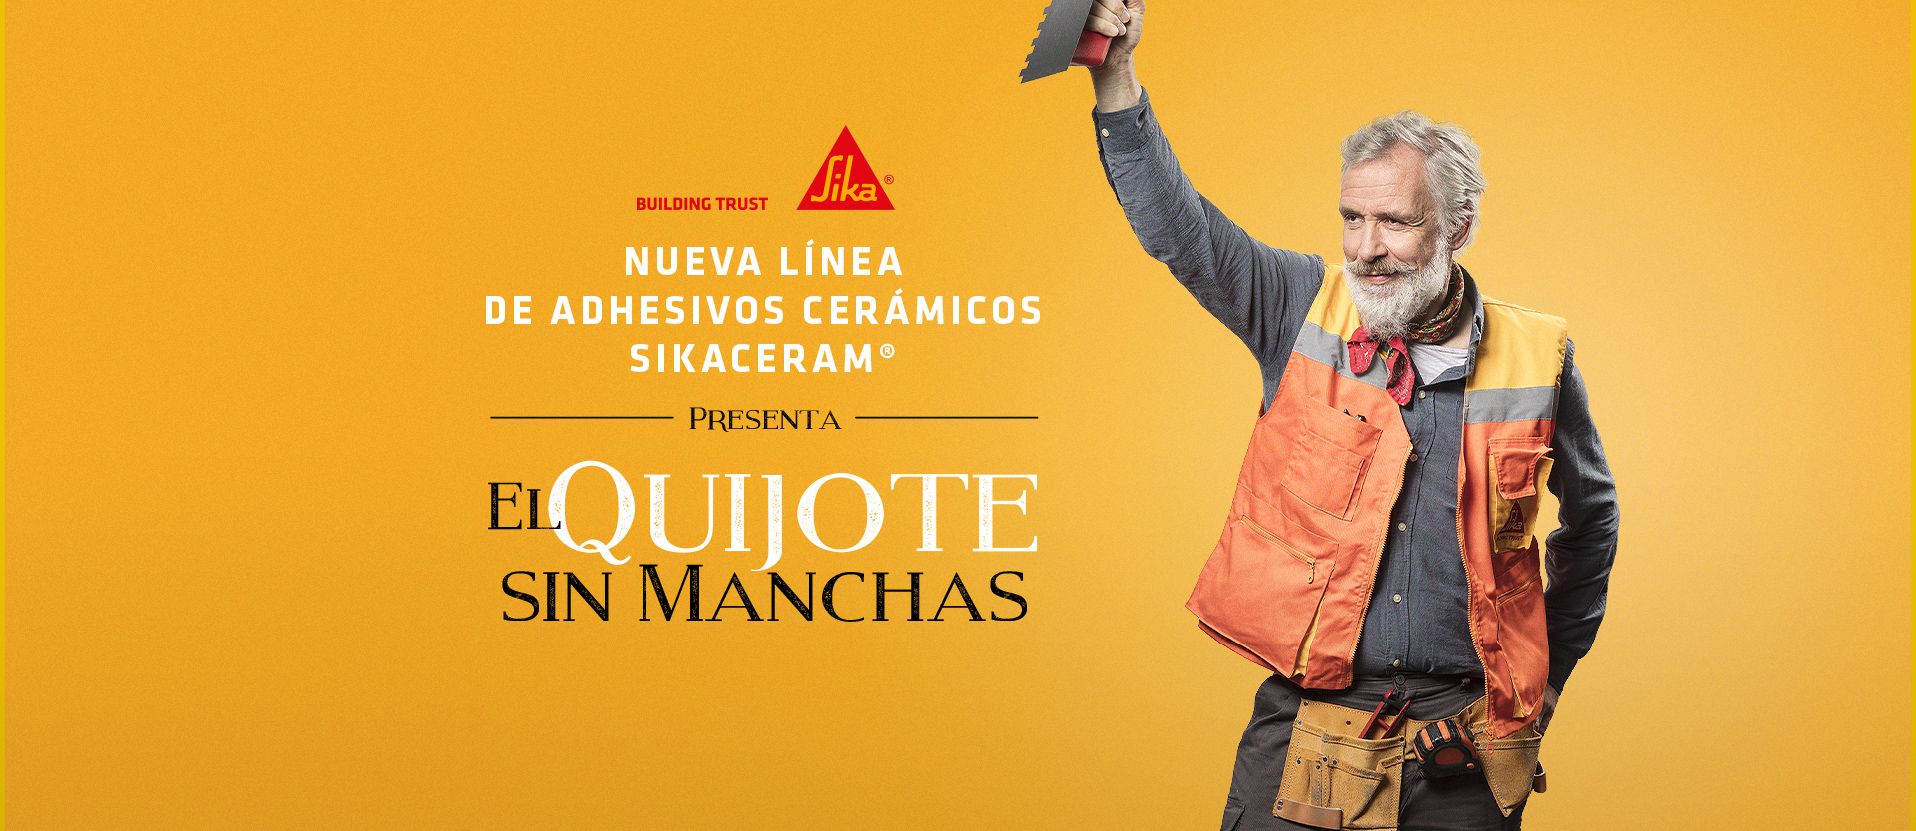 El Quijote Sin Manchas - Sika